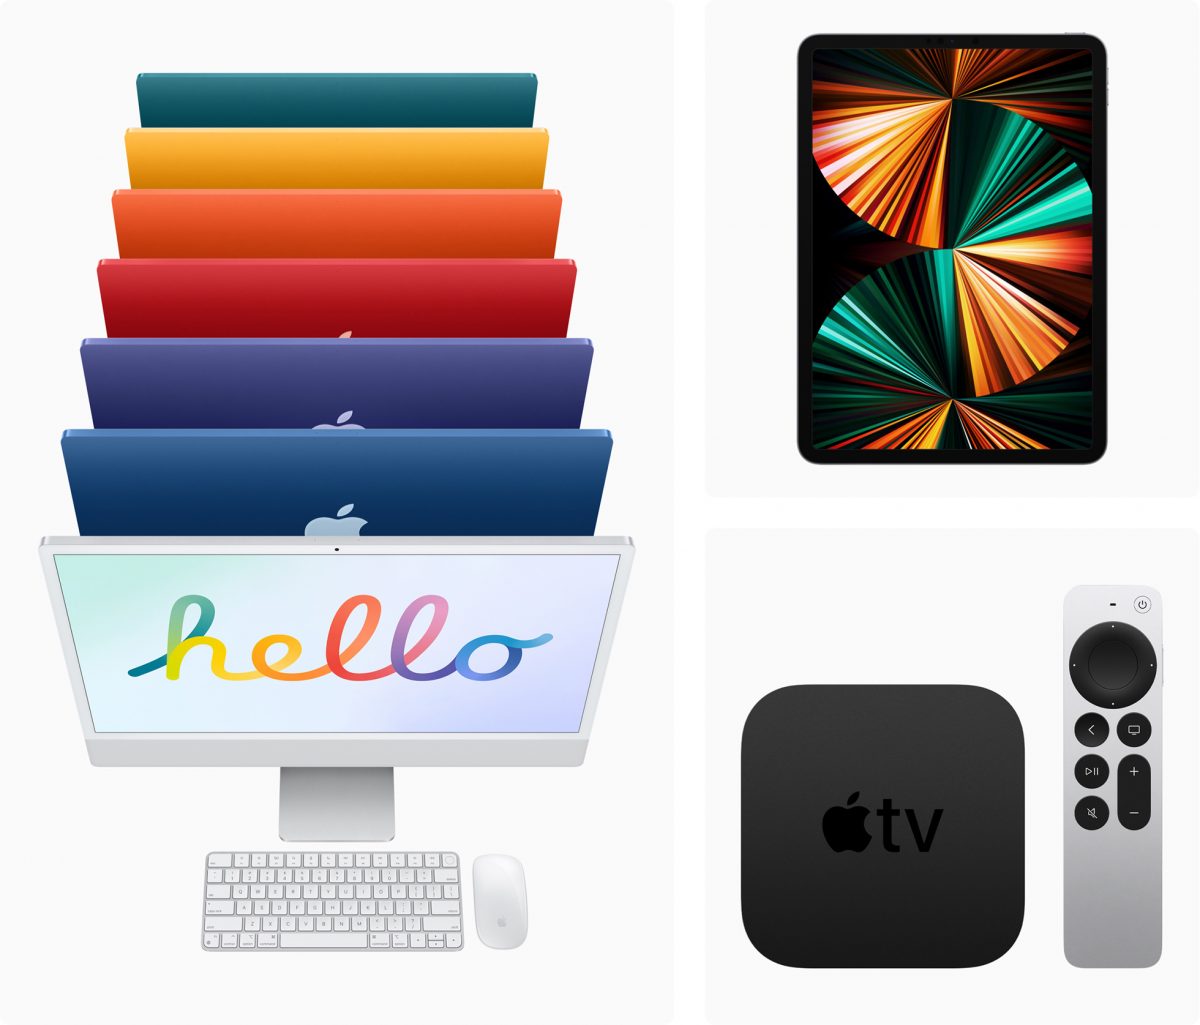 iPad Pro 2021、iMac 與 Apple TV 4K 將於日後在台灣上市 - apple, apple newsroom, apple TV, apple tv 上市, apple tv 購買, apple tv上市, apple tv購 買, apple tv購買, iMac, iMac 上市, iMac 購買, iMac上市, iMac購買, iMac開賣, ipad pro, iPad Pro 2020, iPad Pro 2021, iPad Pro 上市, iPad Pro 購買, iPad Pro 開賣, iPad Pro上市, iPad Pro購買, iPad Pro開賣, newsroom - 科技生活 - teXch